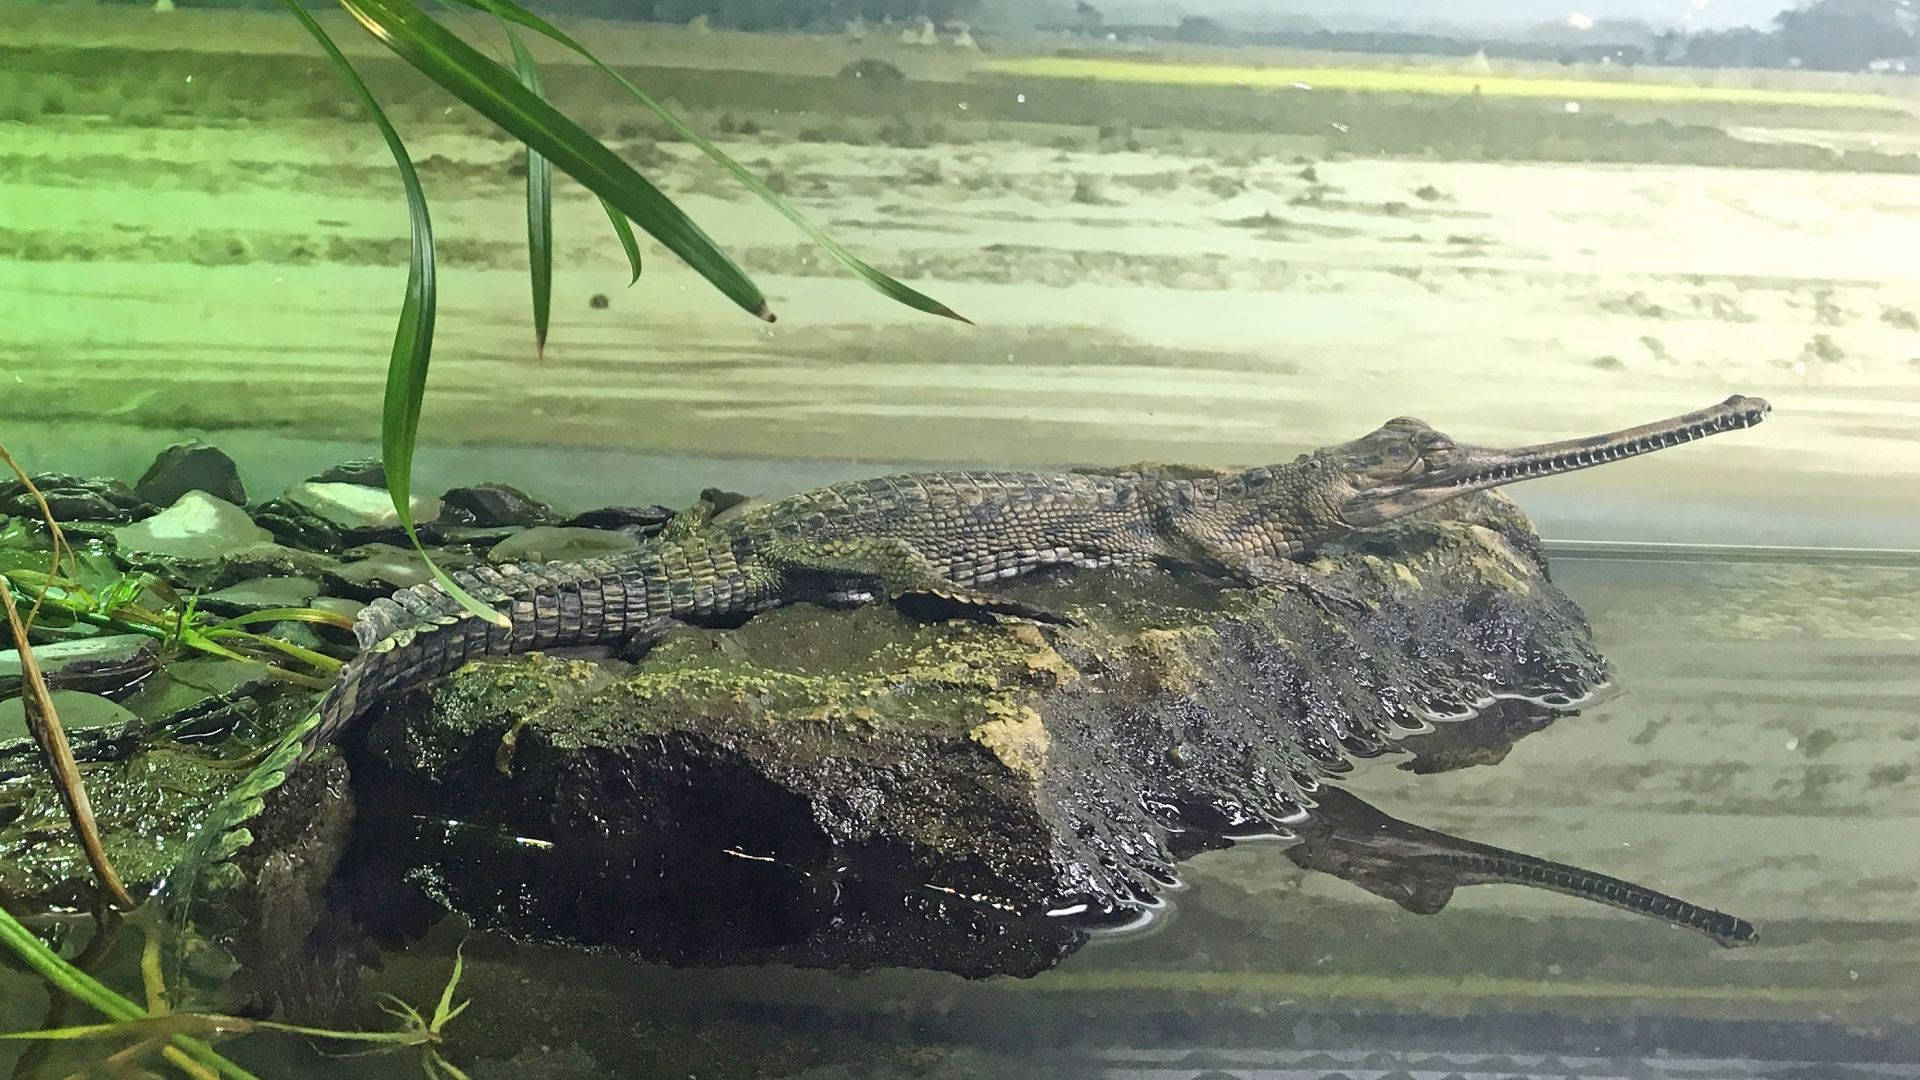 Gavial Crocodile Lake Nature Photography Wallpaper